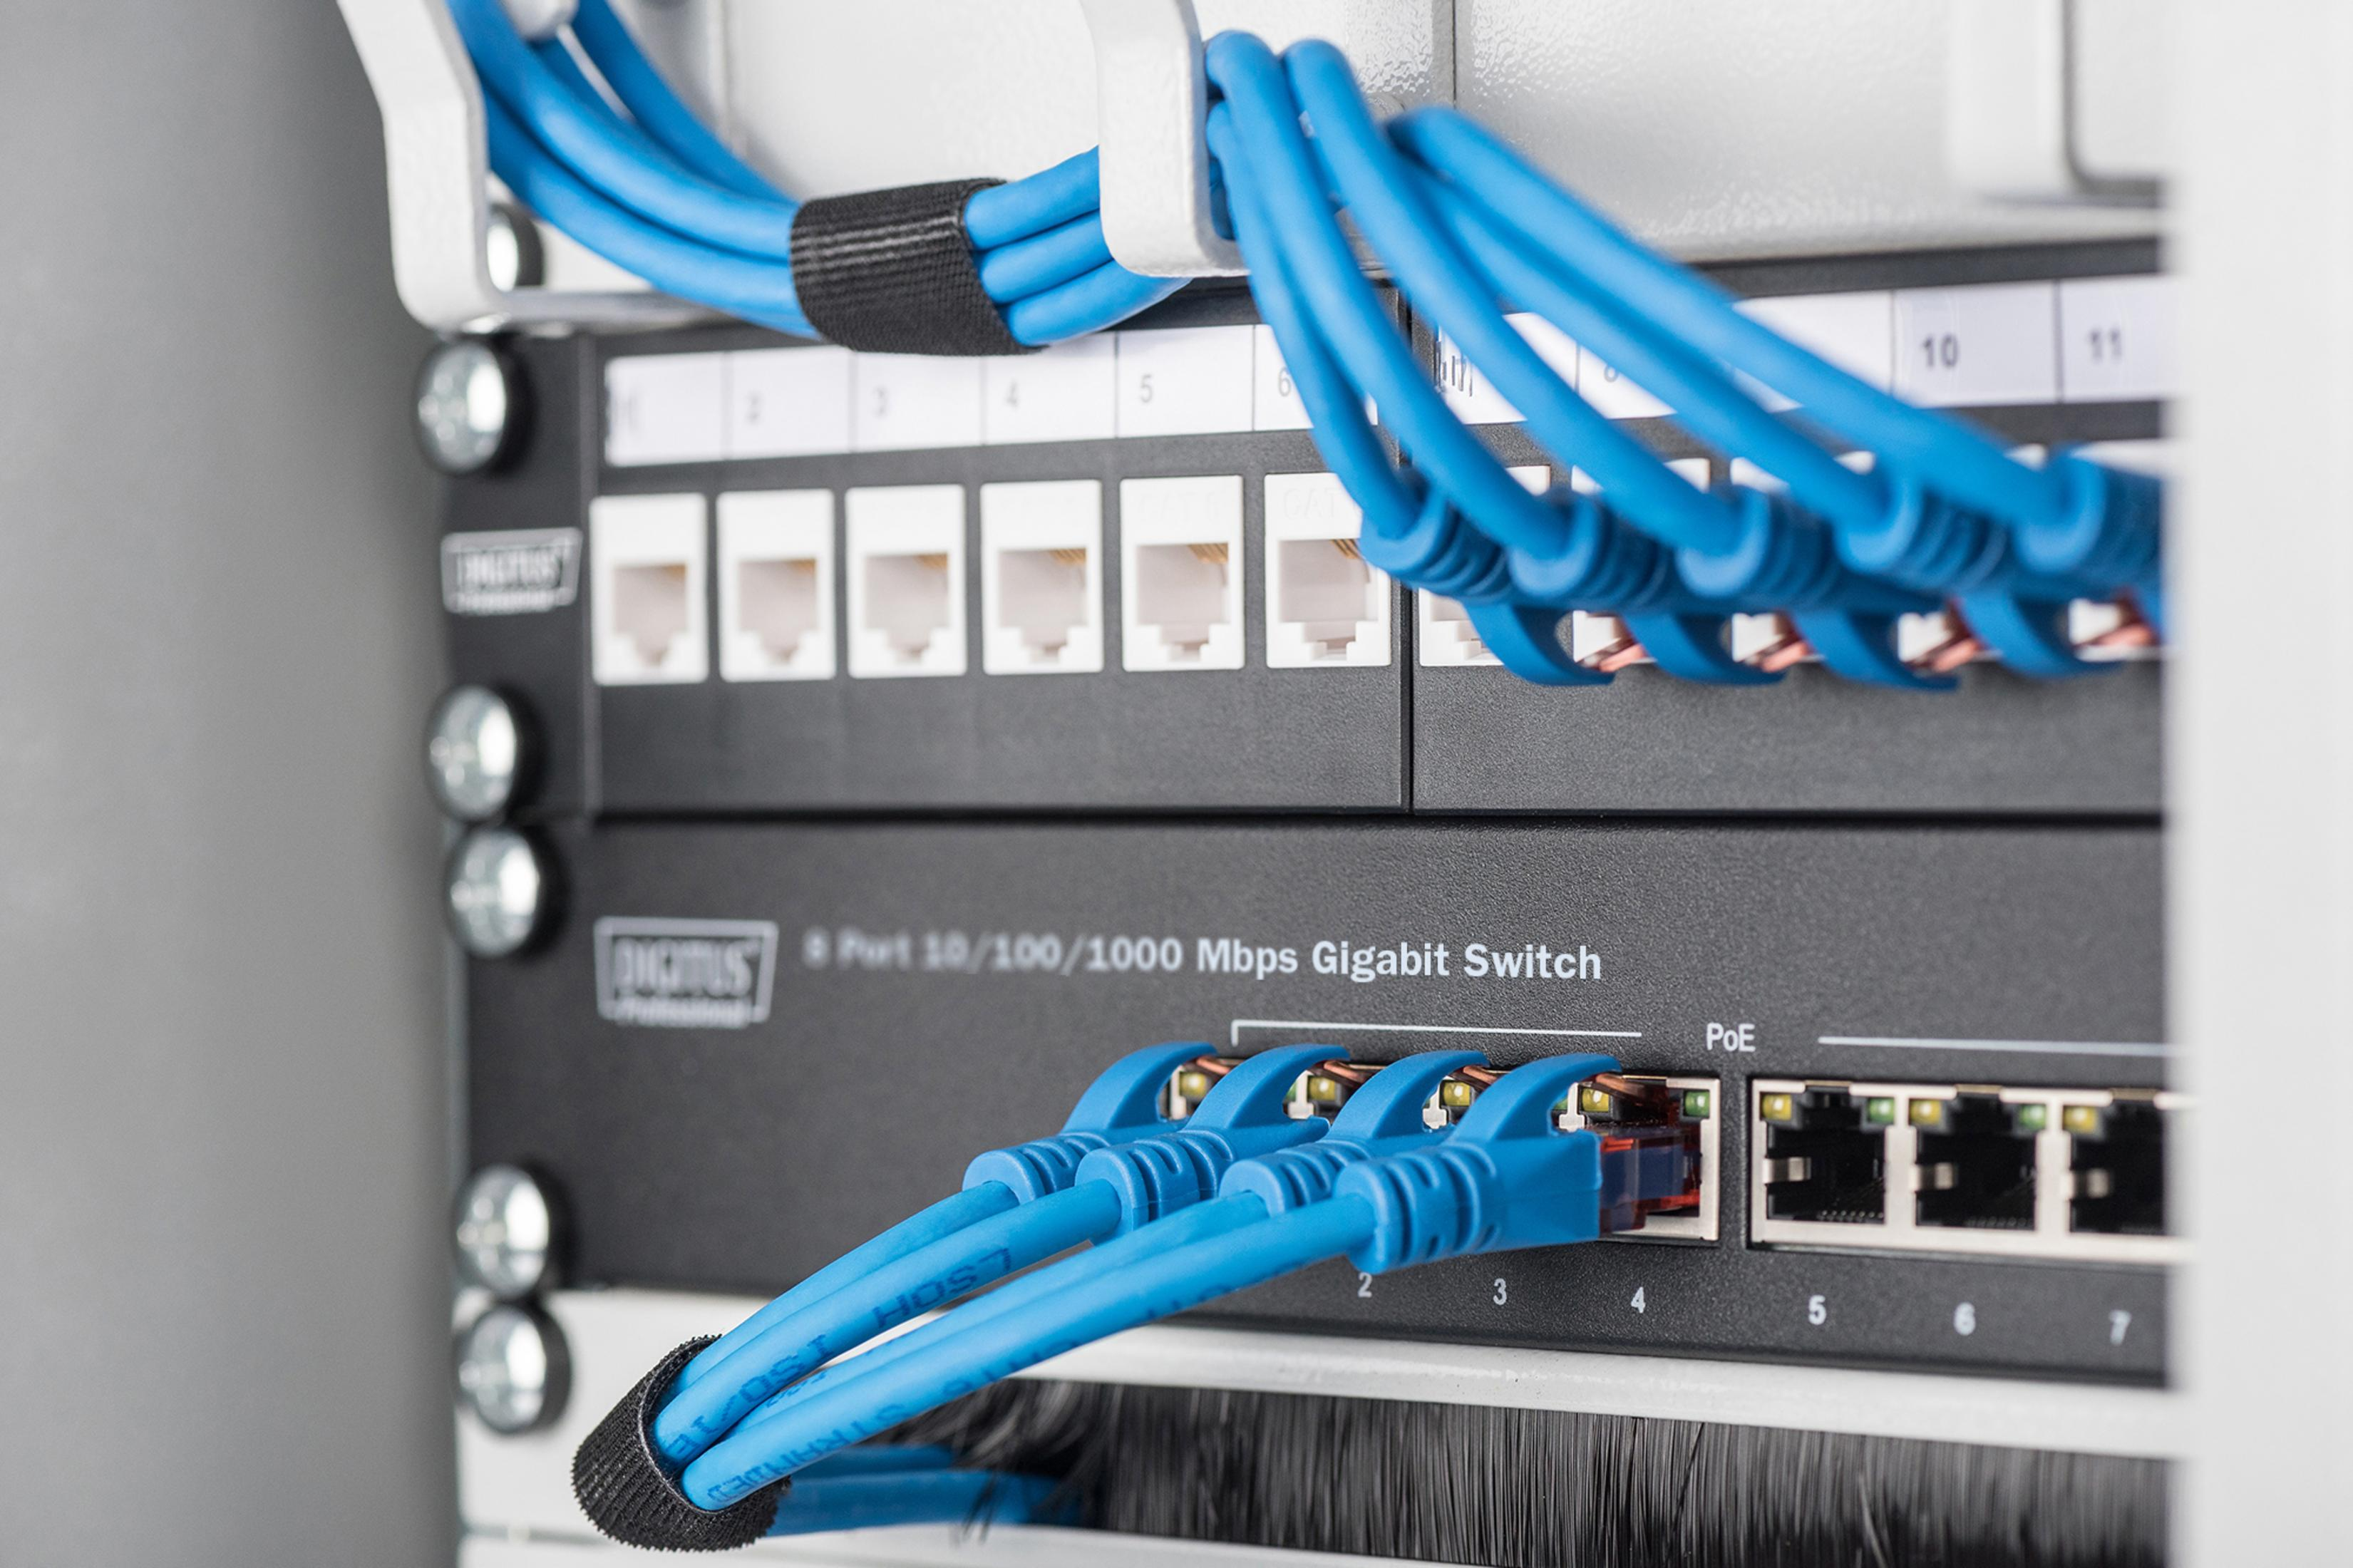 Ethernet DIGITUS 10ZOLL GIGABIT 8PORT DN-80114 SWITCH, Switch